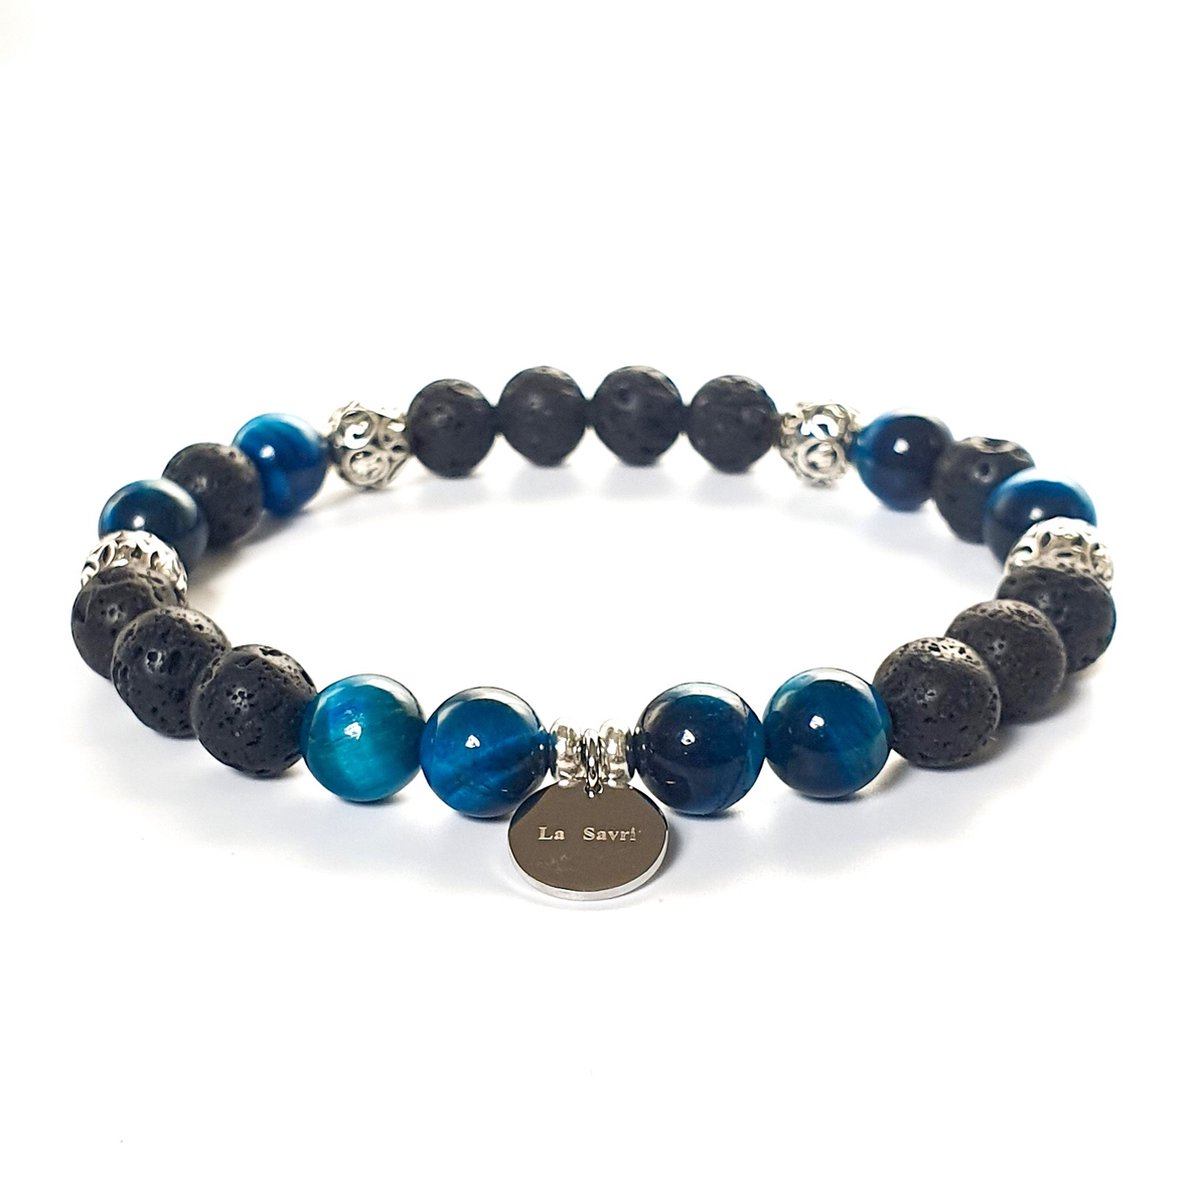 La Savri - Armband/Bracelet - 925 Sterling Silver - Blue Tiger Eye Gemstones - Black Lava Stones